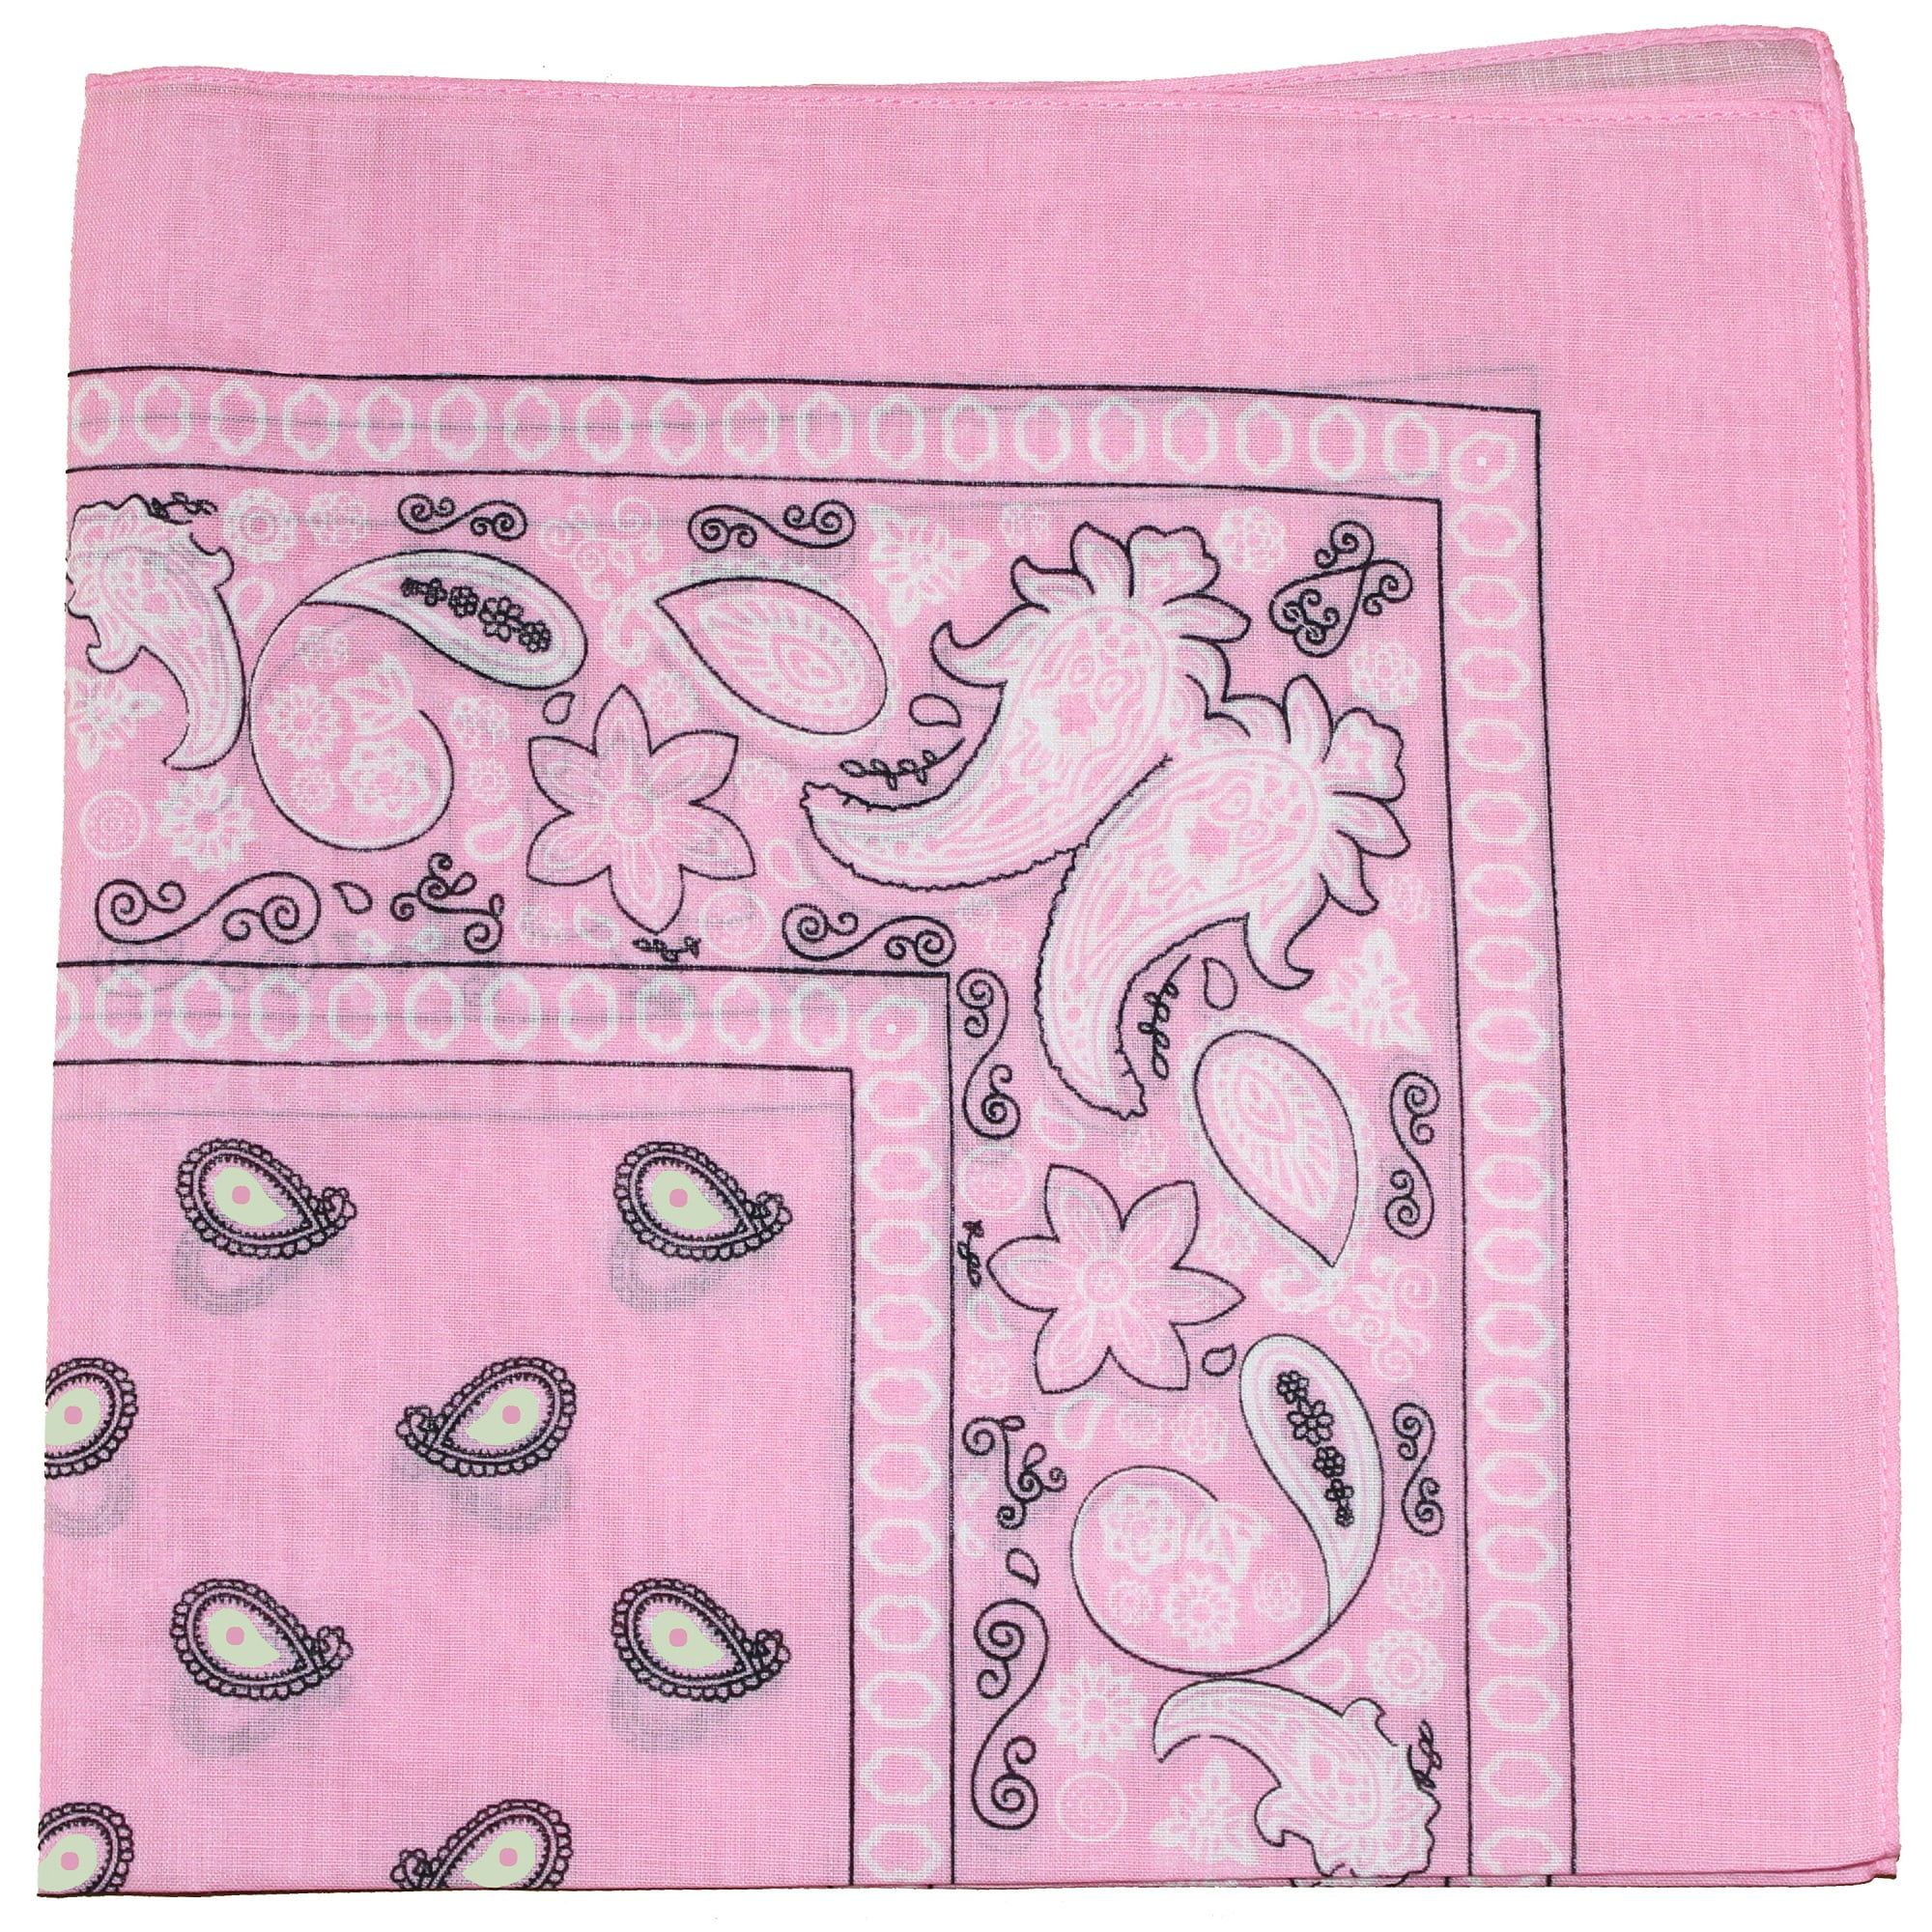 Paisley 100% Cotton Double Sided Bandana - 22 inches (Pink) | Walmart (US)